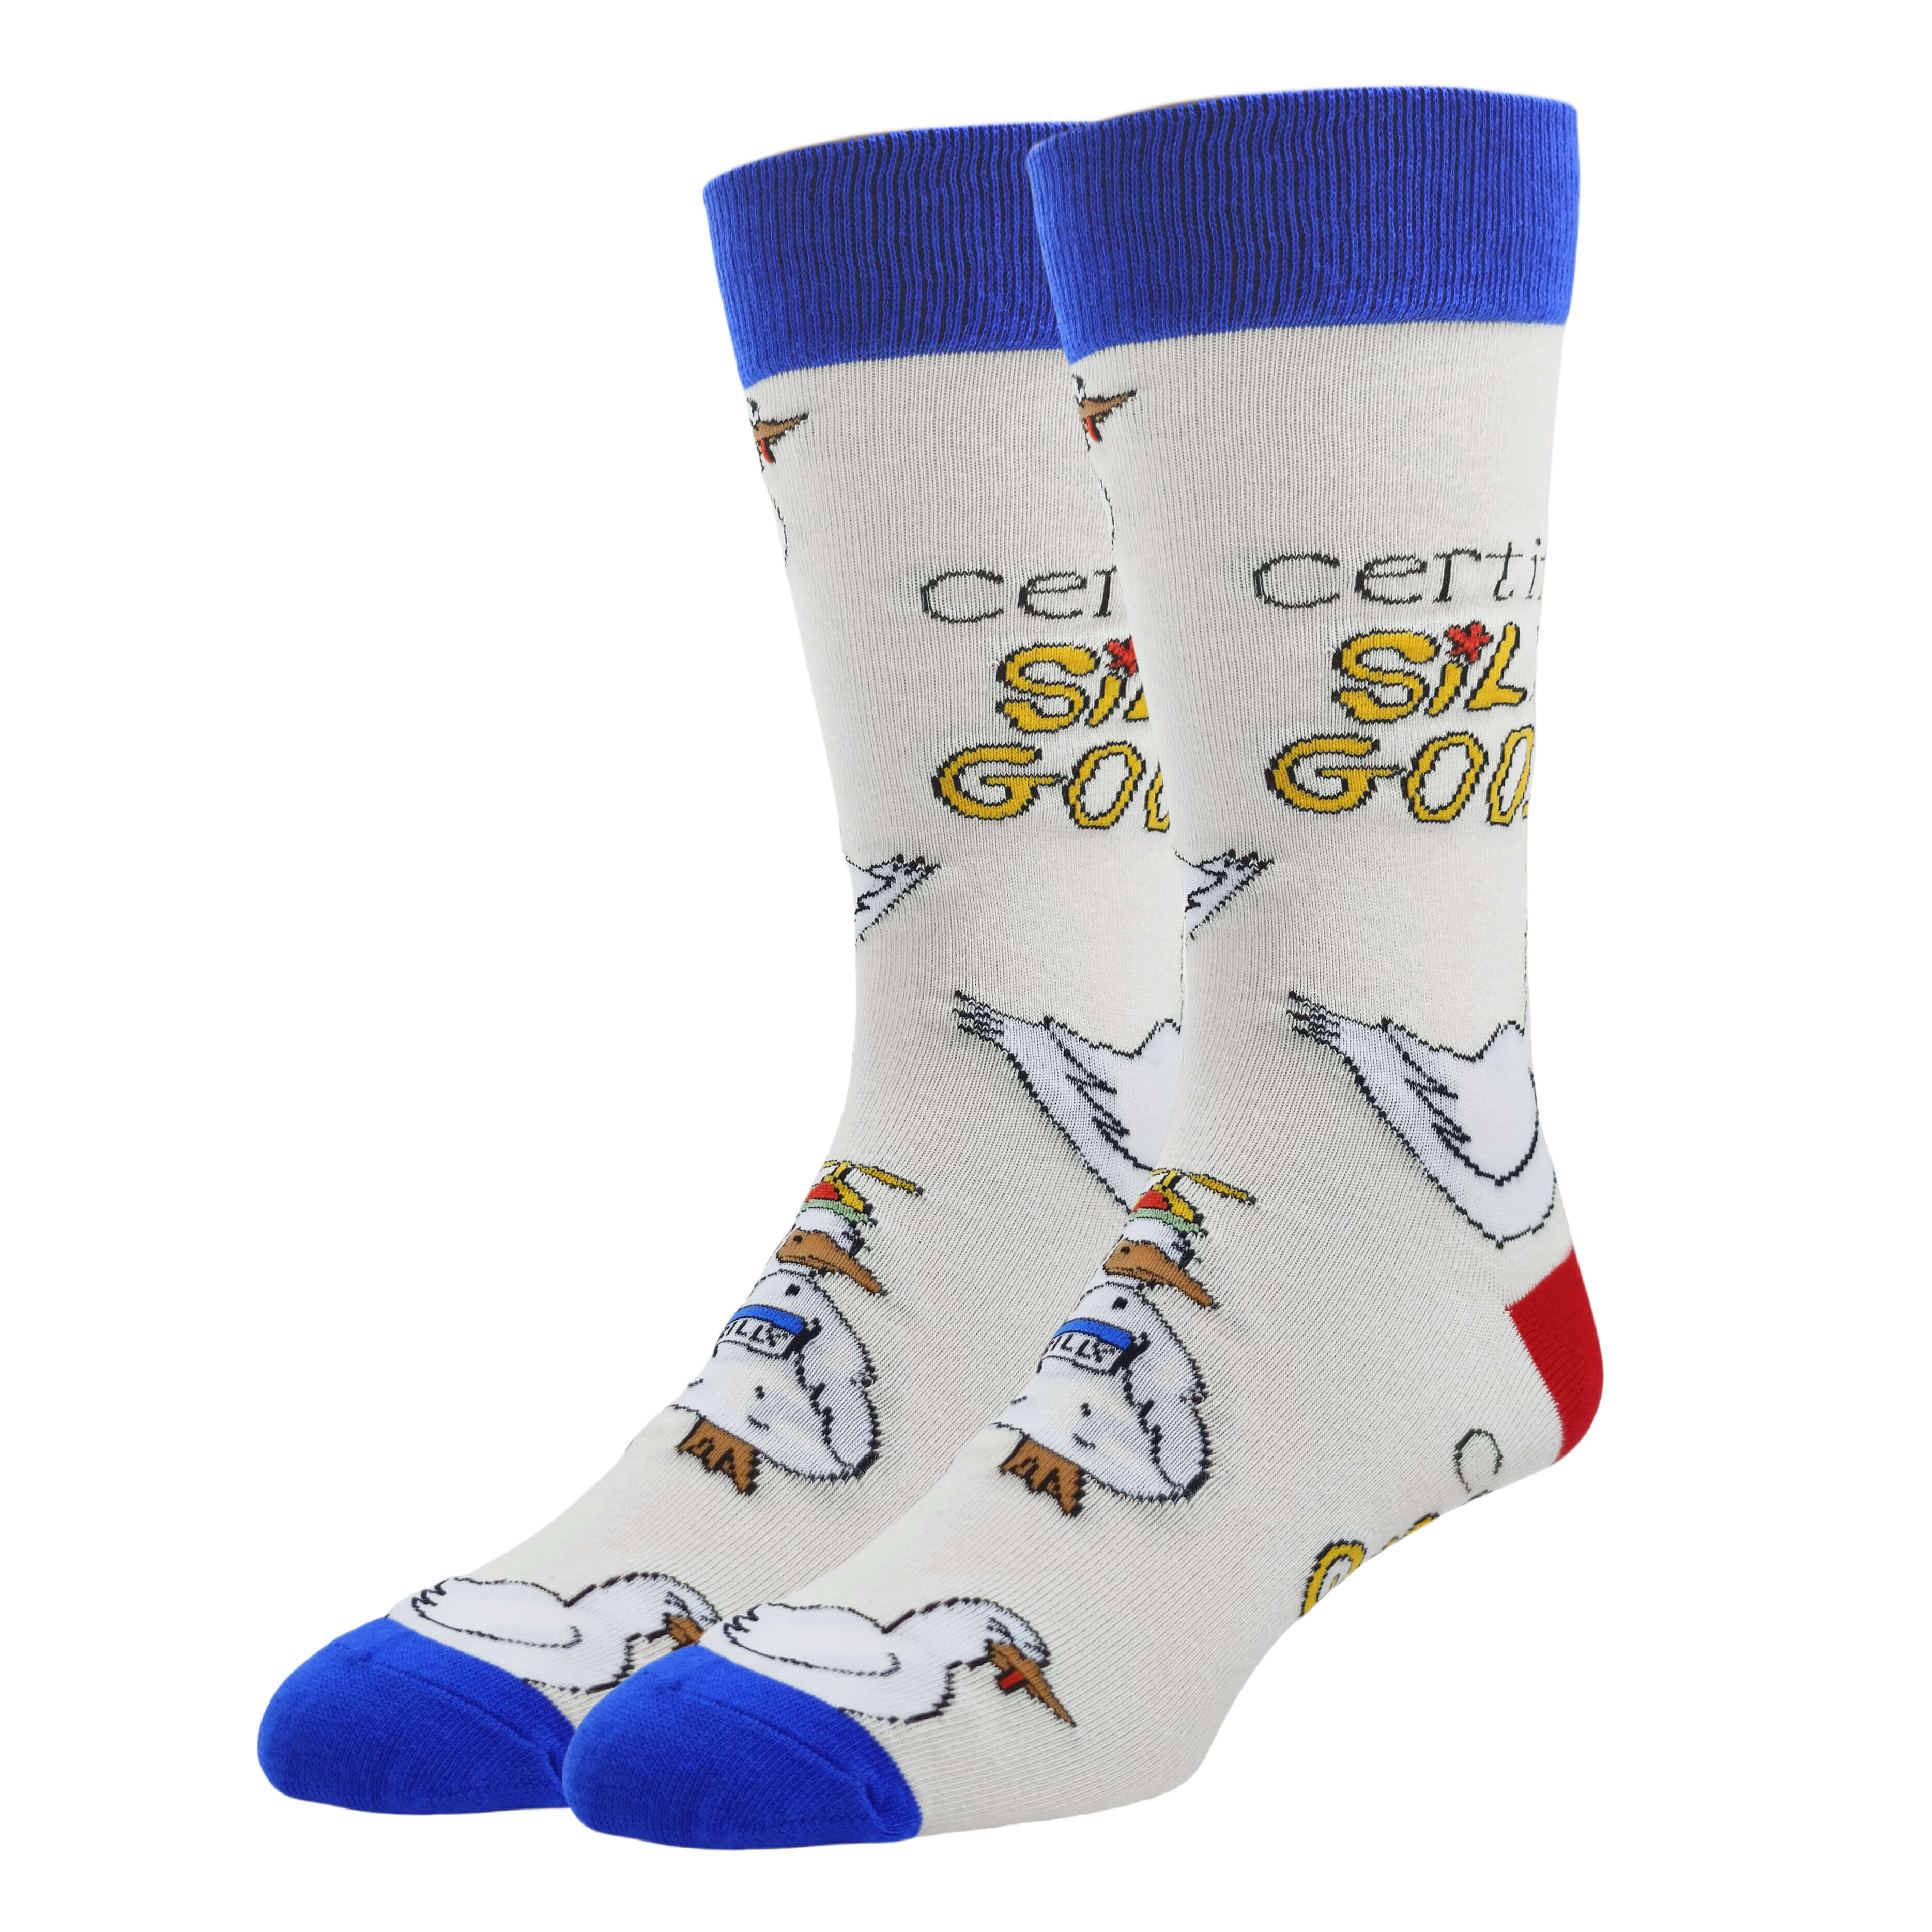 silly goose men's crew socks from Oooh Yeah Socks